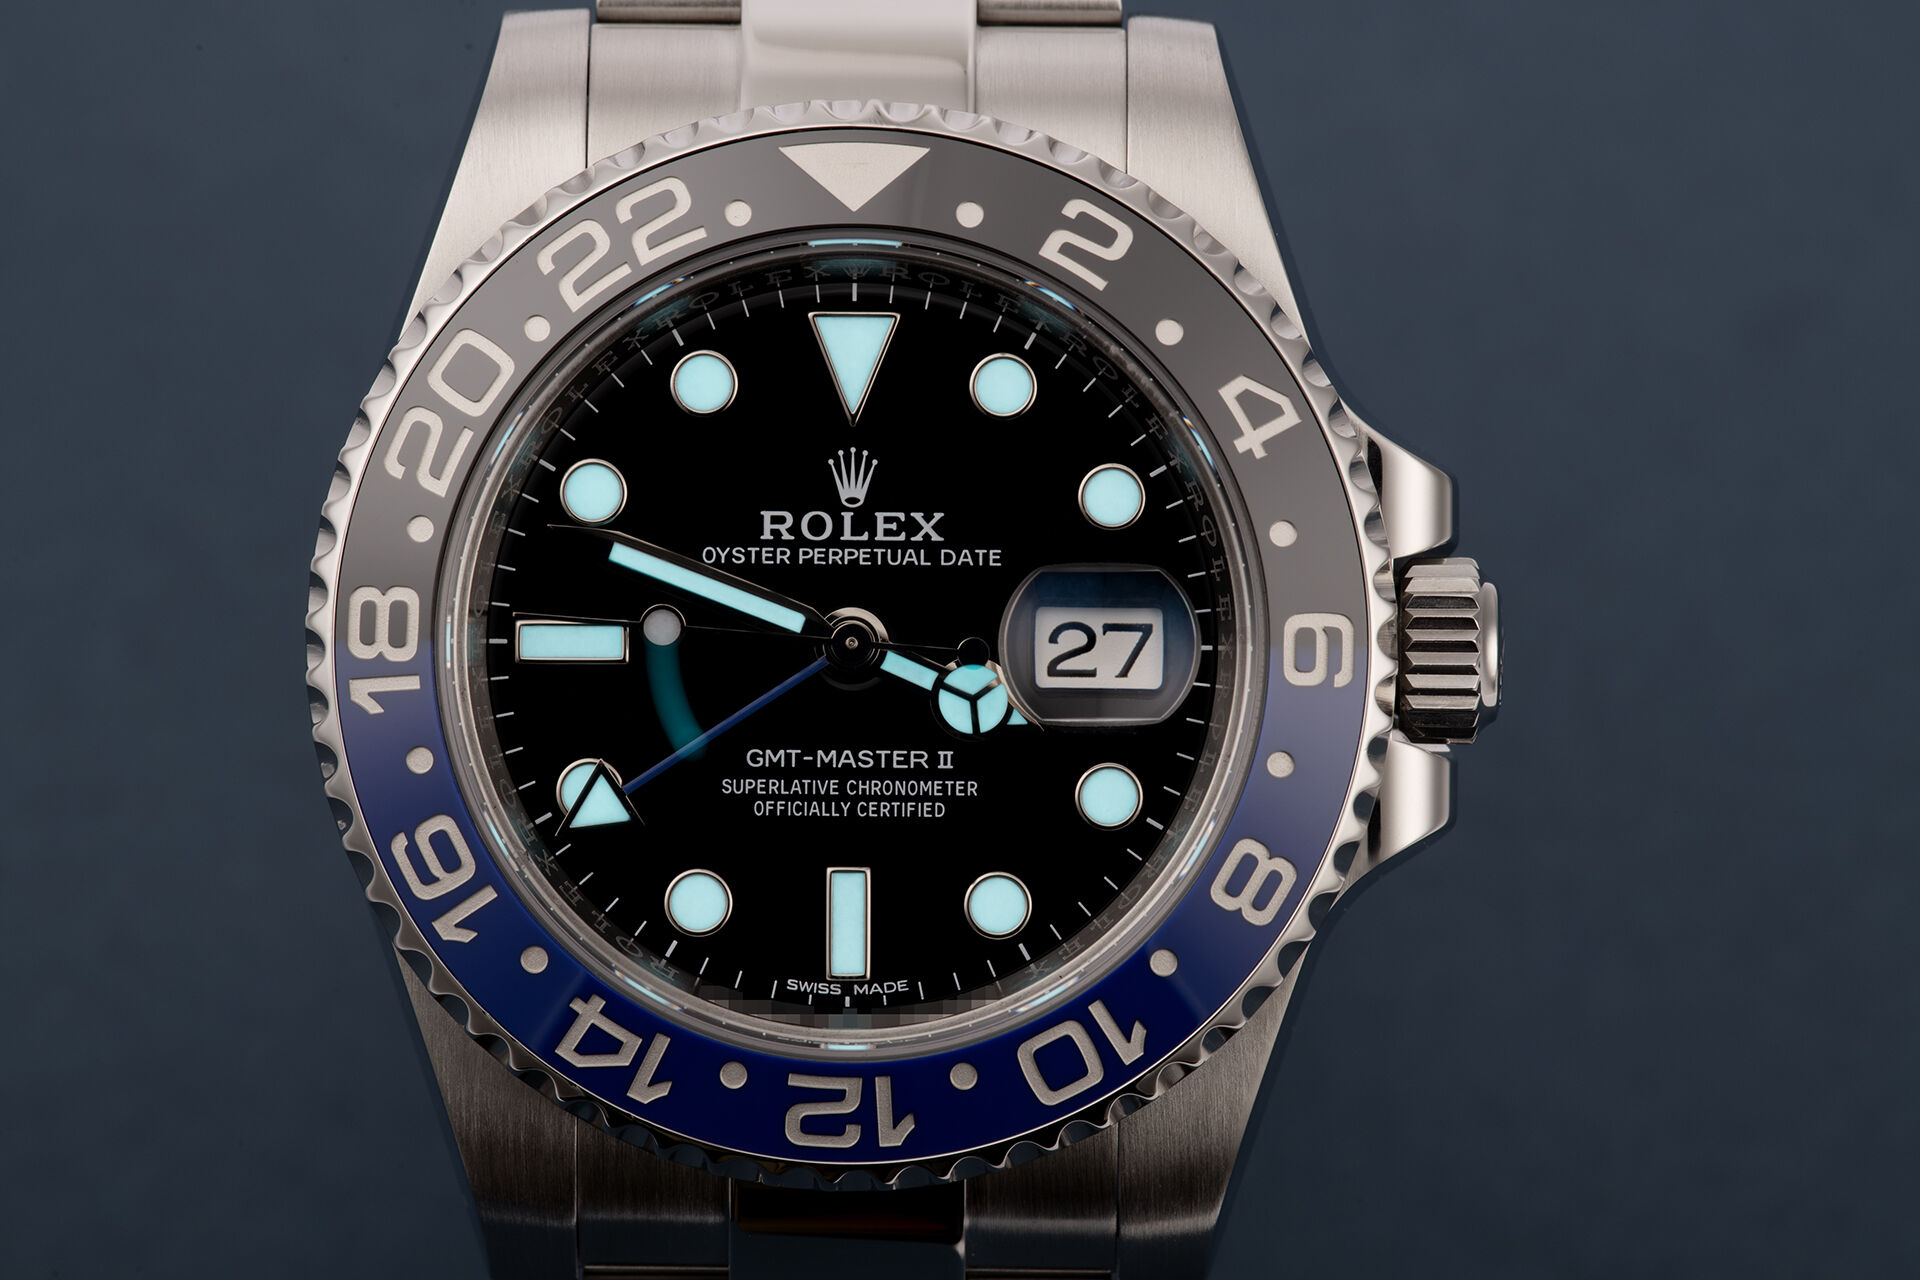 ref 116710BLNR | Final Model Production | Rolex GMT-Master II